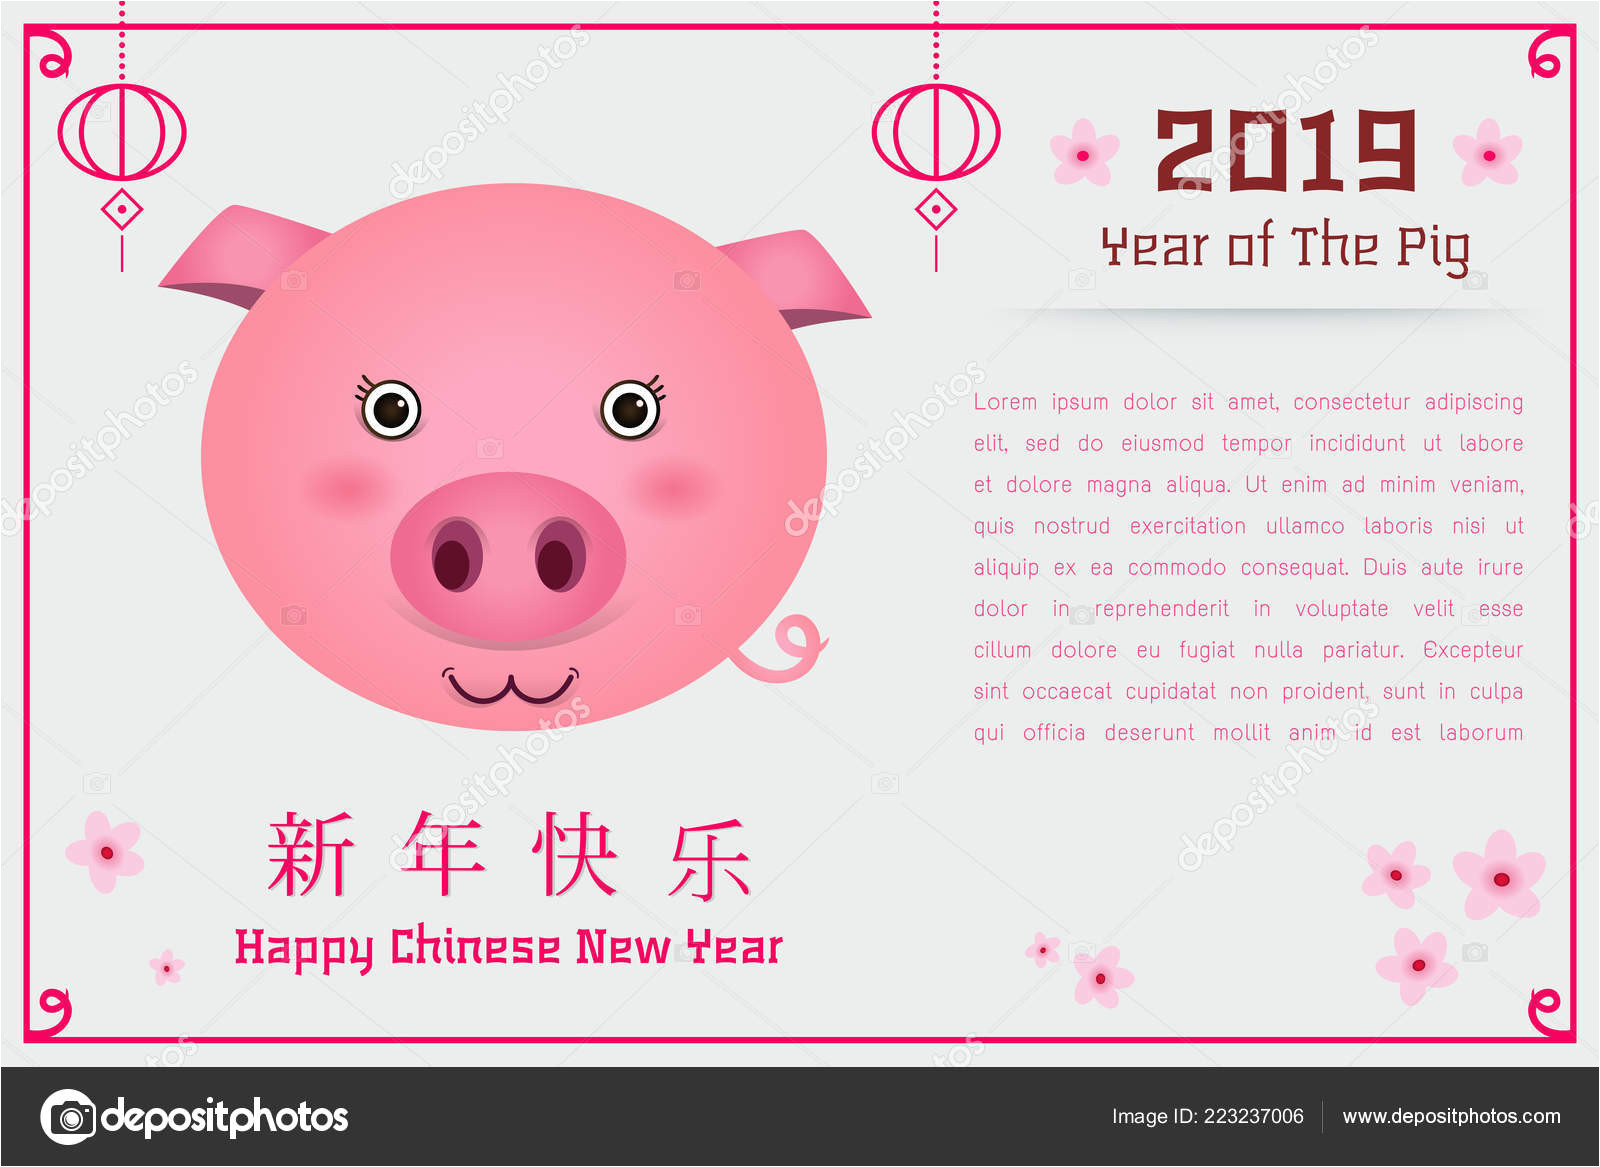 depositphotos 223237006 stock illustration happy chinese new year 2019 jpg